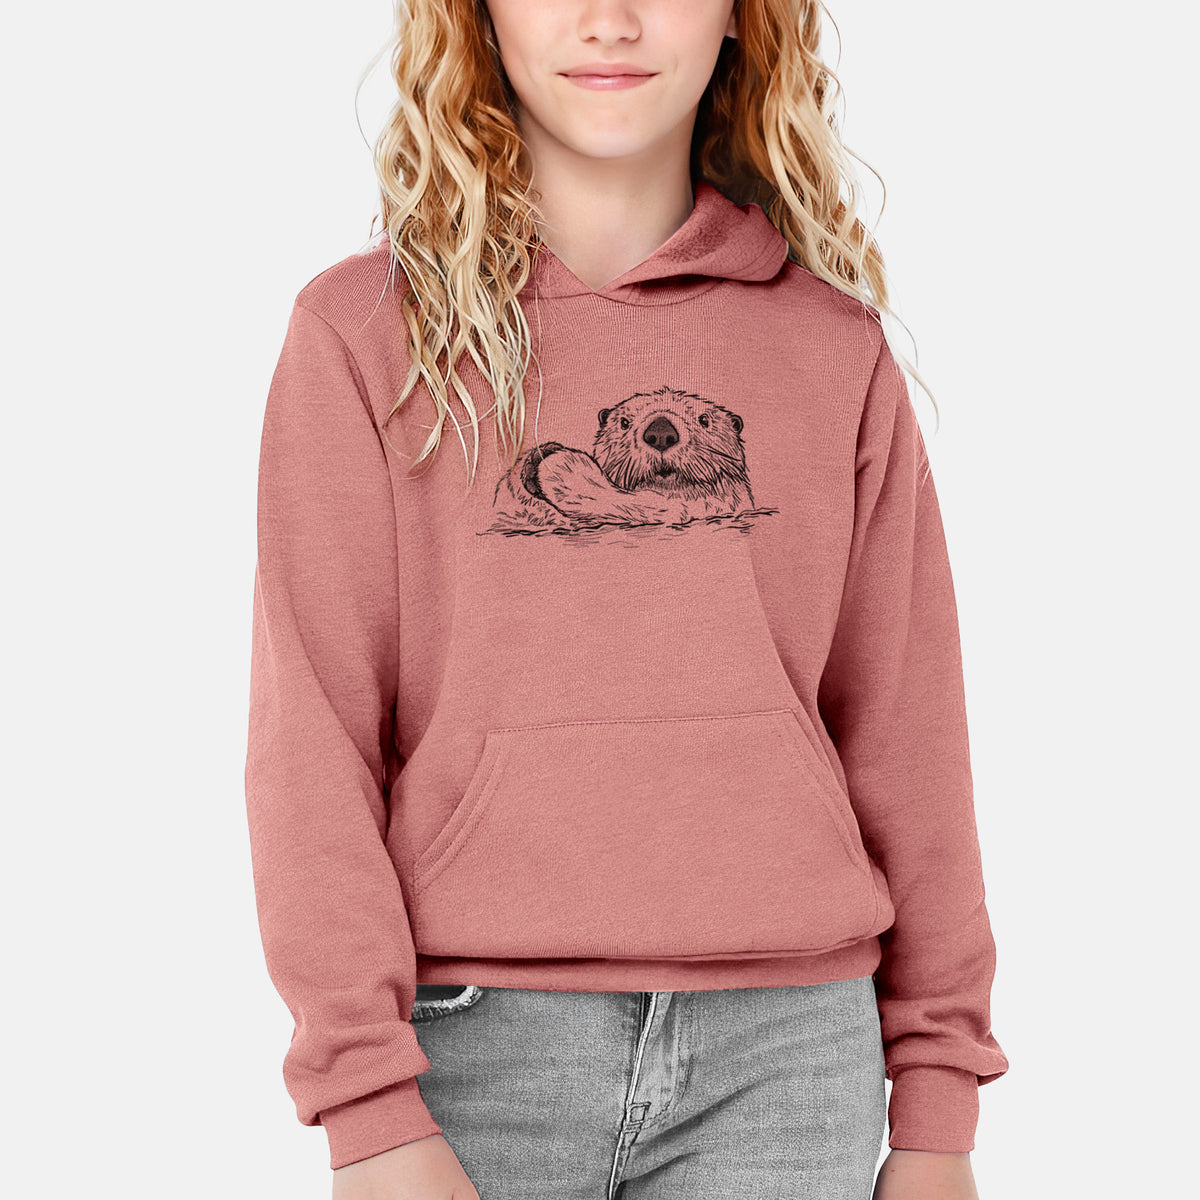 Northern Sea Otter - Enhydra lutris kenyoni - Youth Hoodie Sweatshirt